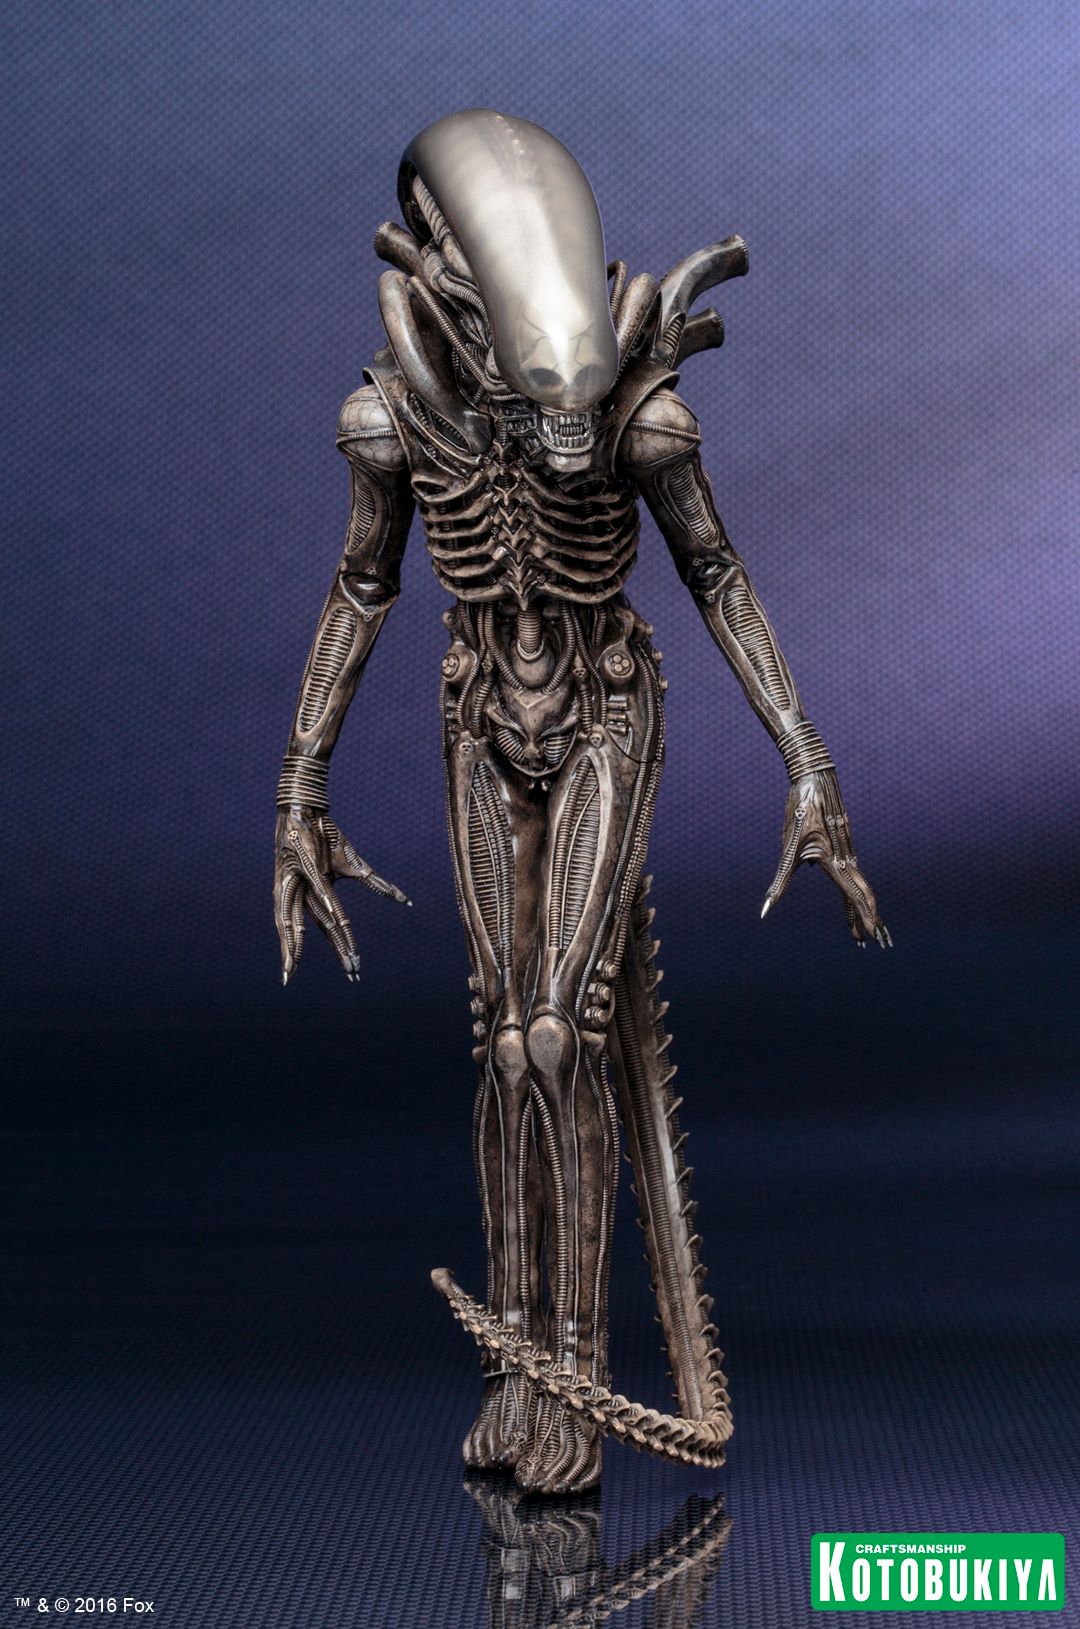 Koto-Big-Chap-Alien-Statue-001.jpg